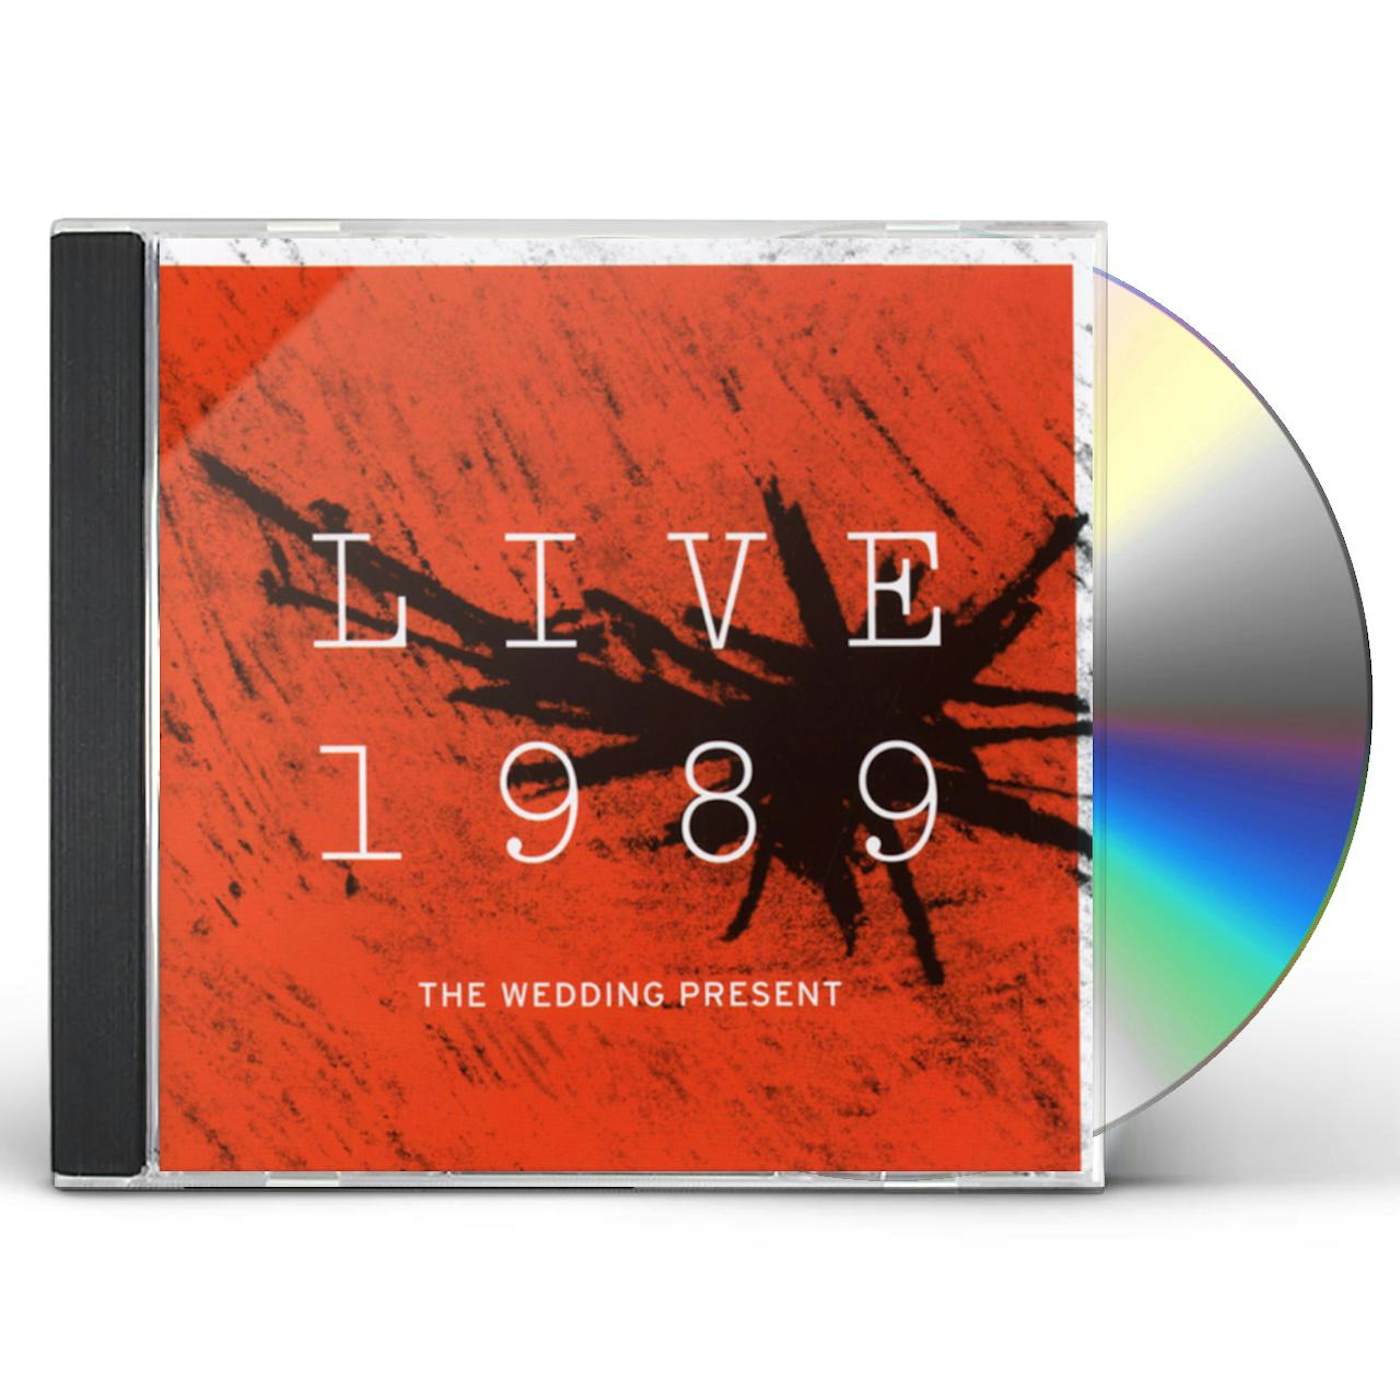 The Wedding Present LIVE 1989 CD